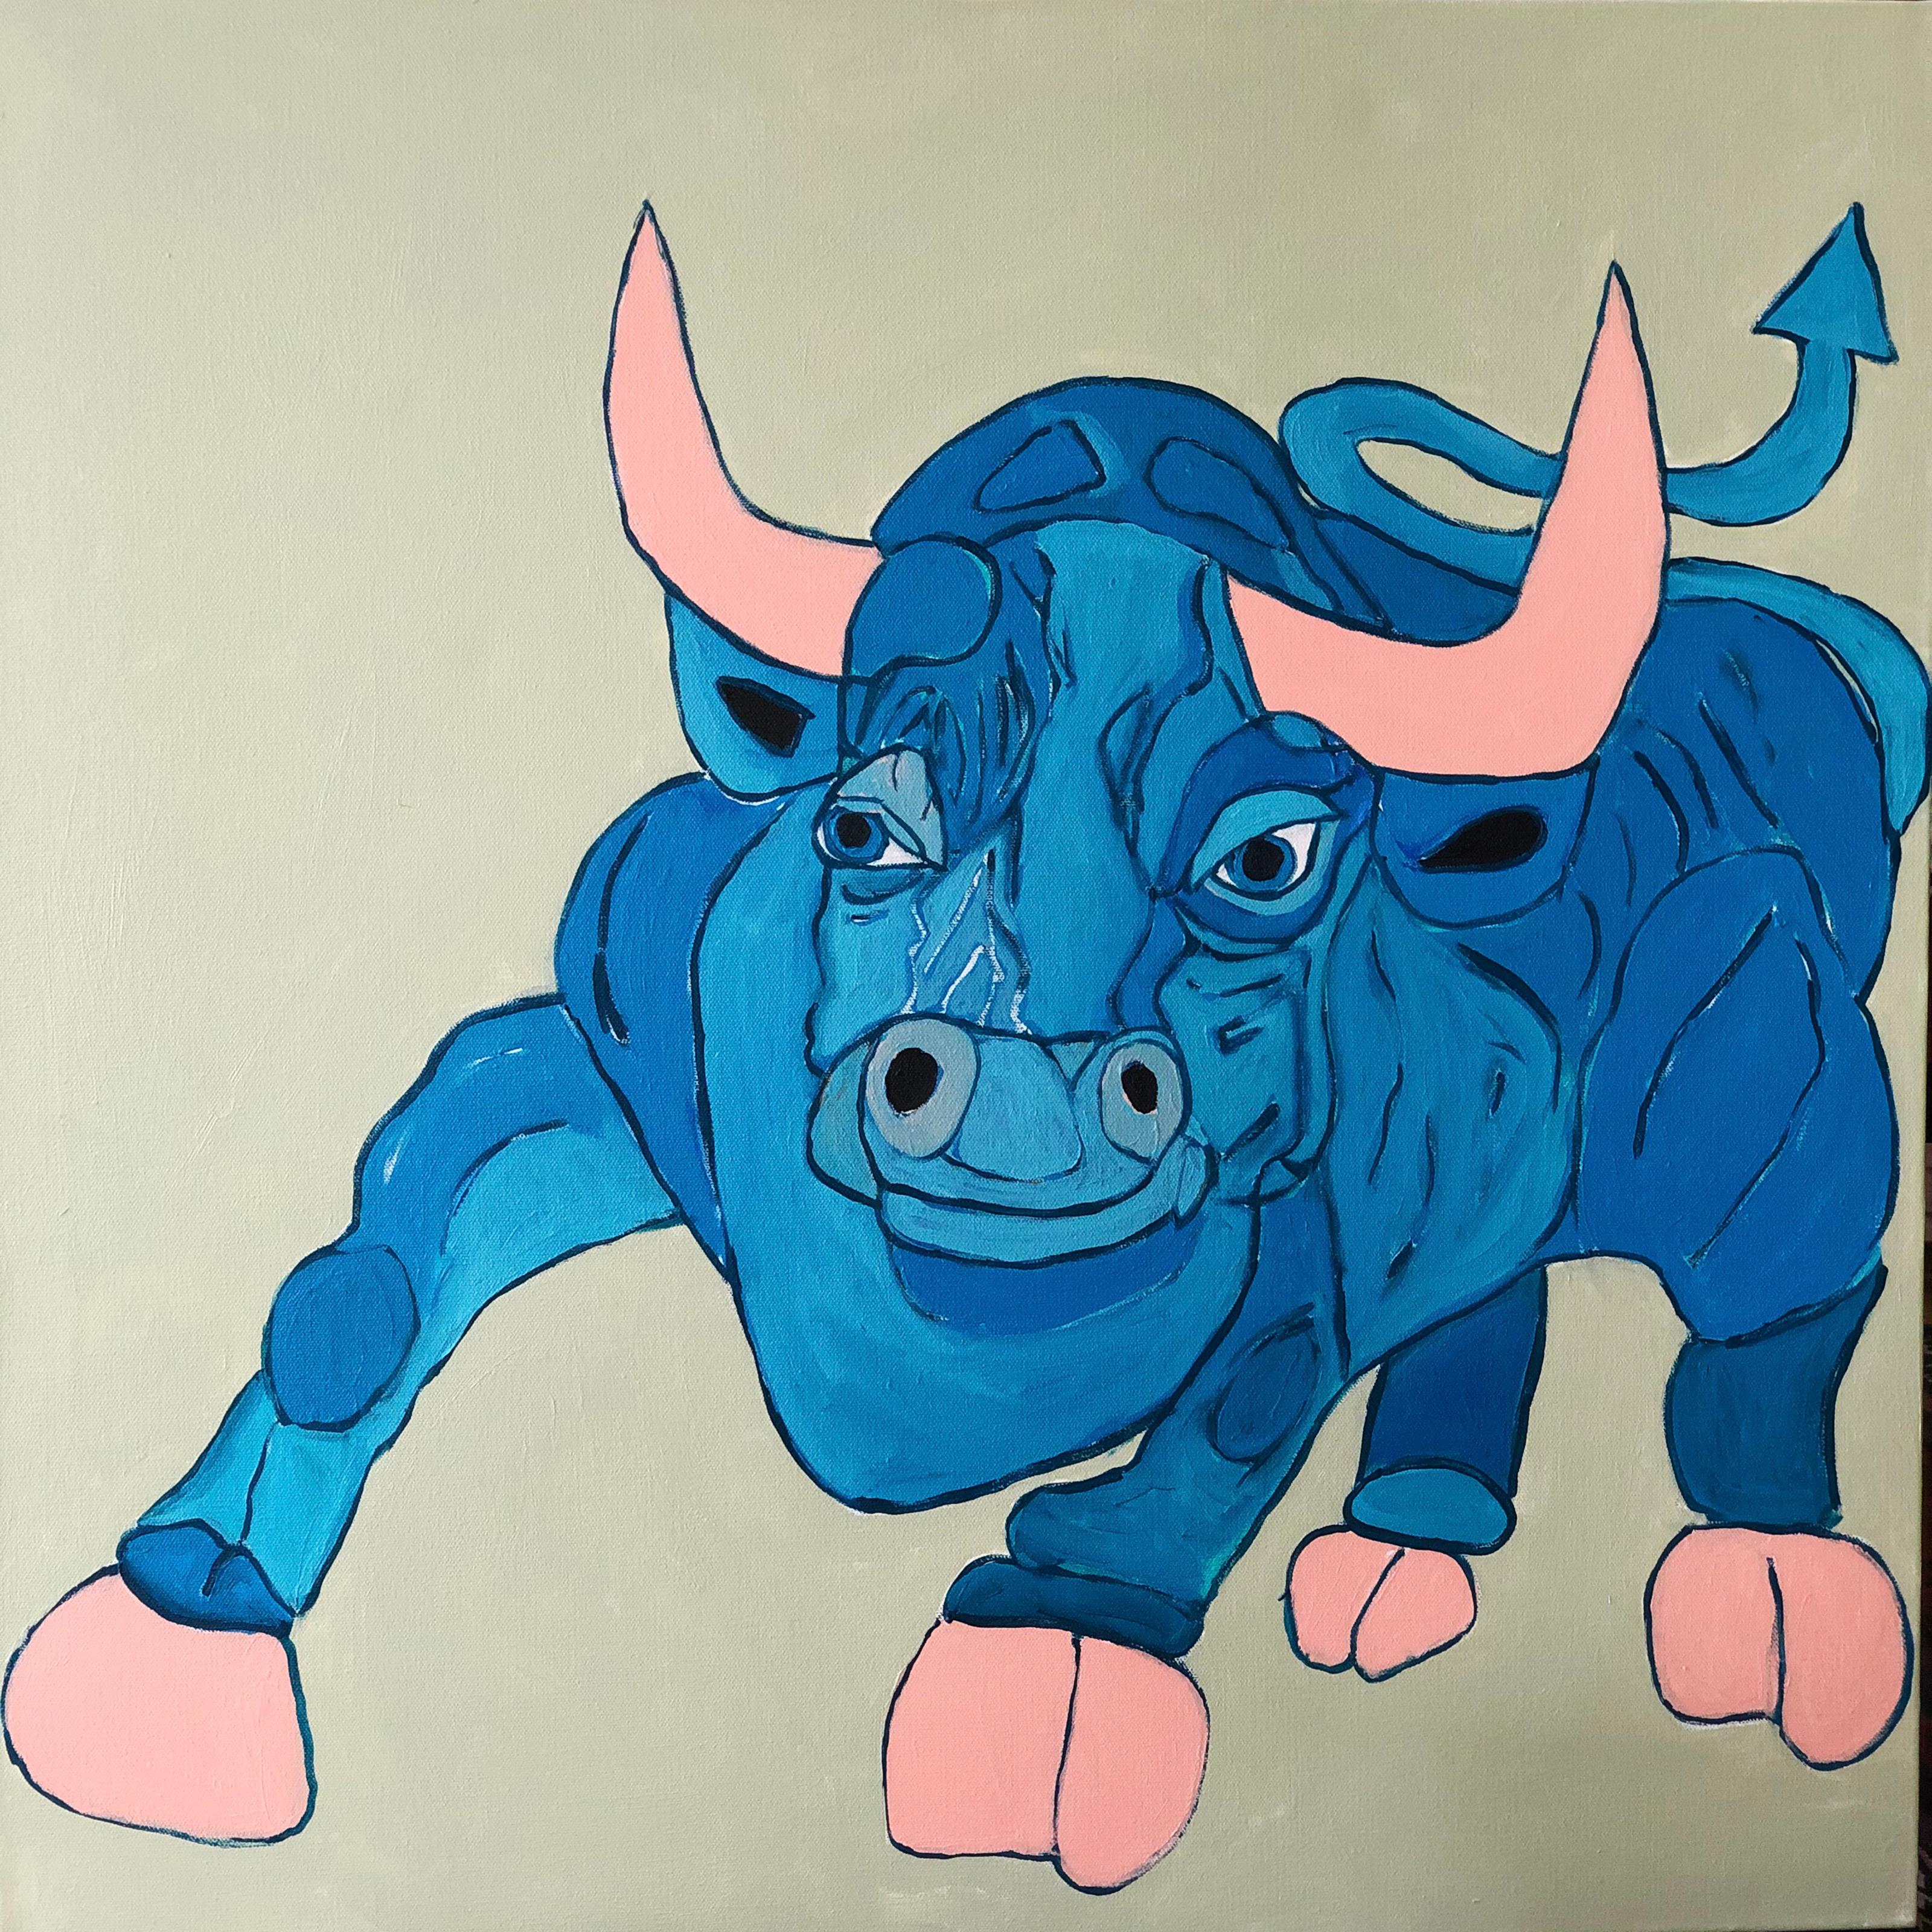 Animal Painting Melinda McLeod - "Azul le taureau" - Peinture acrylique sur toile 